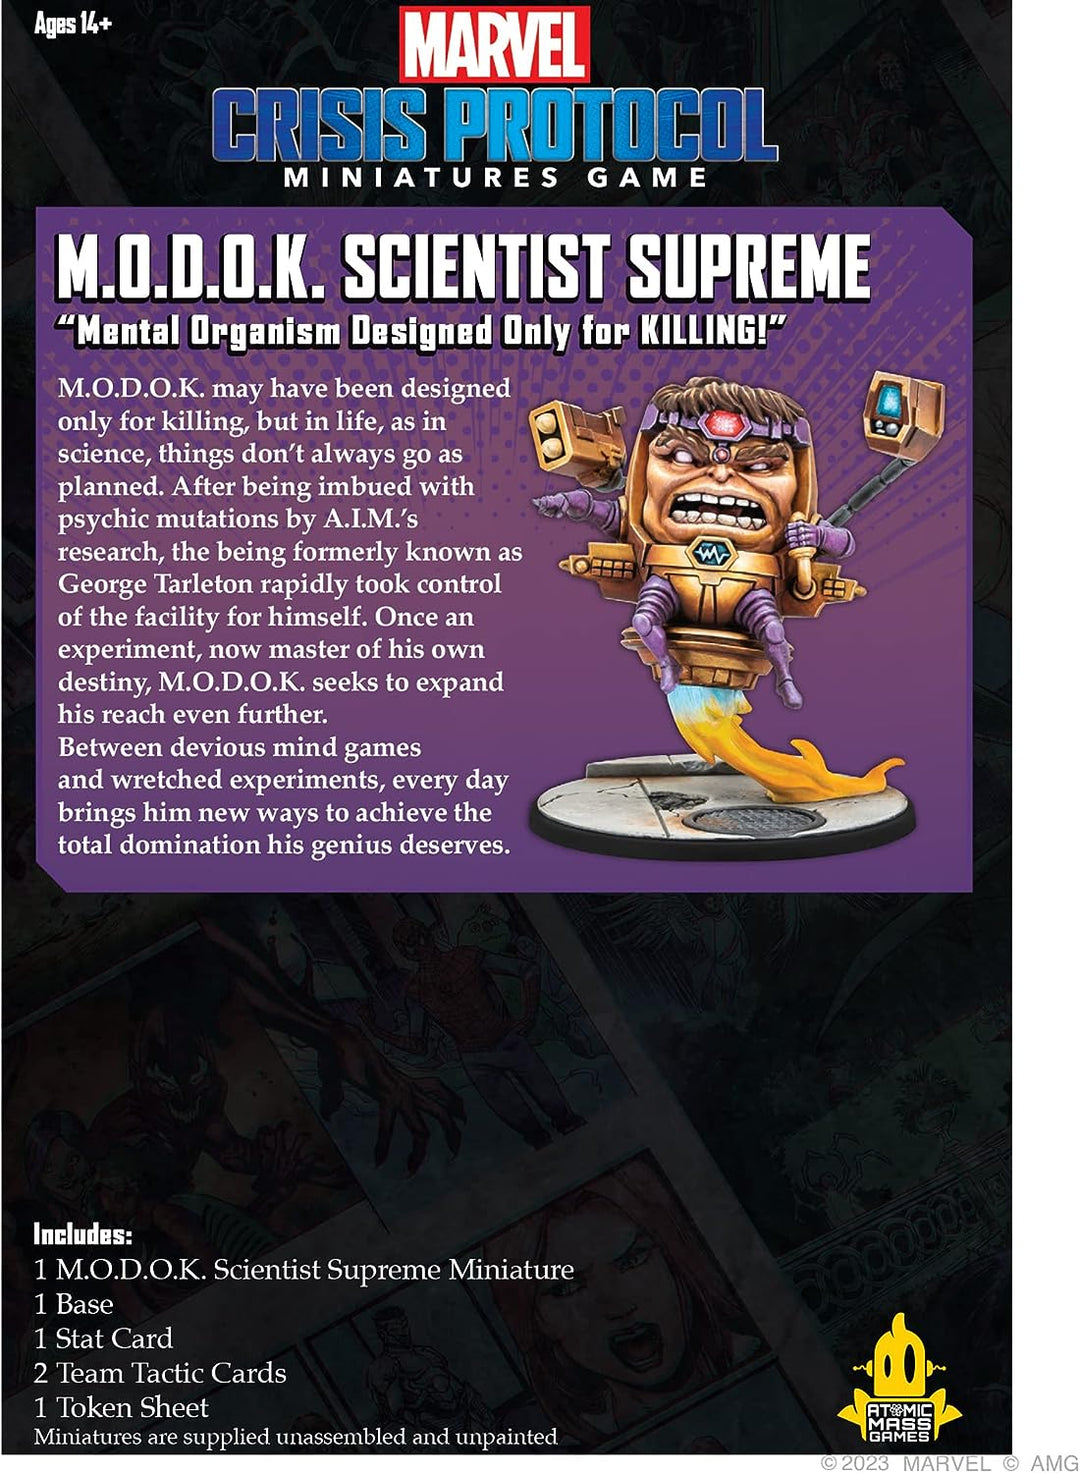 Atomare Massenspiele | Marvel-Krisenprotokoll: MODOK Scientist Supreme | Minia